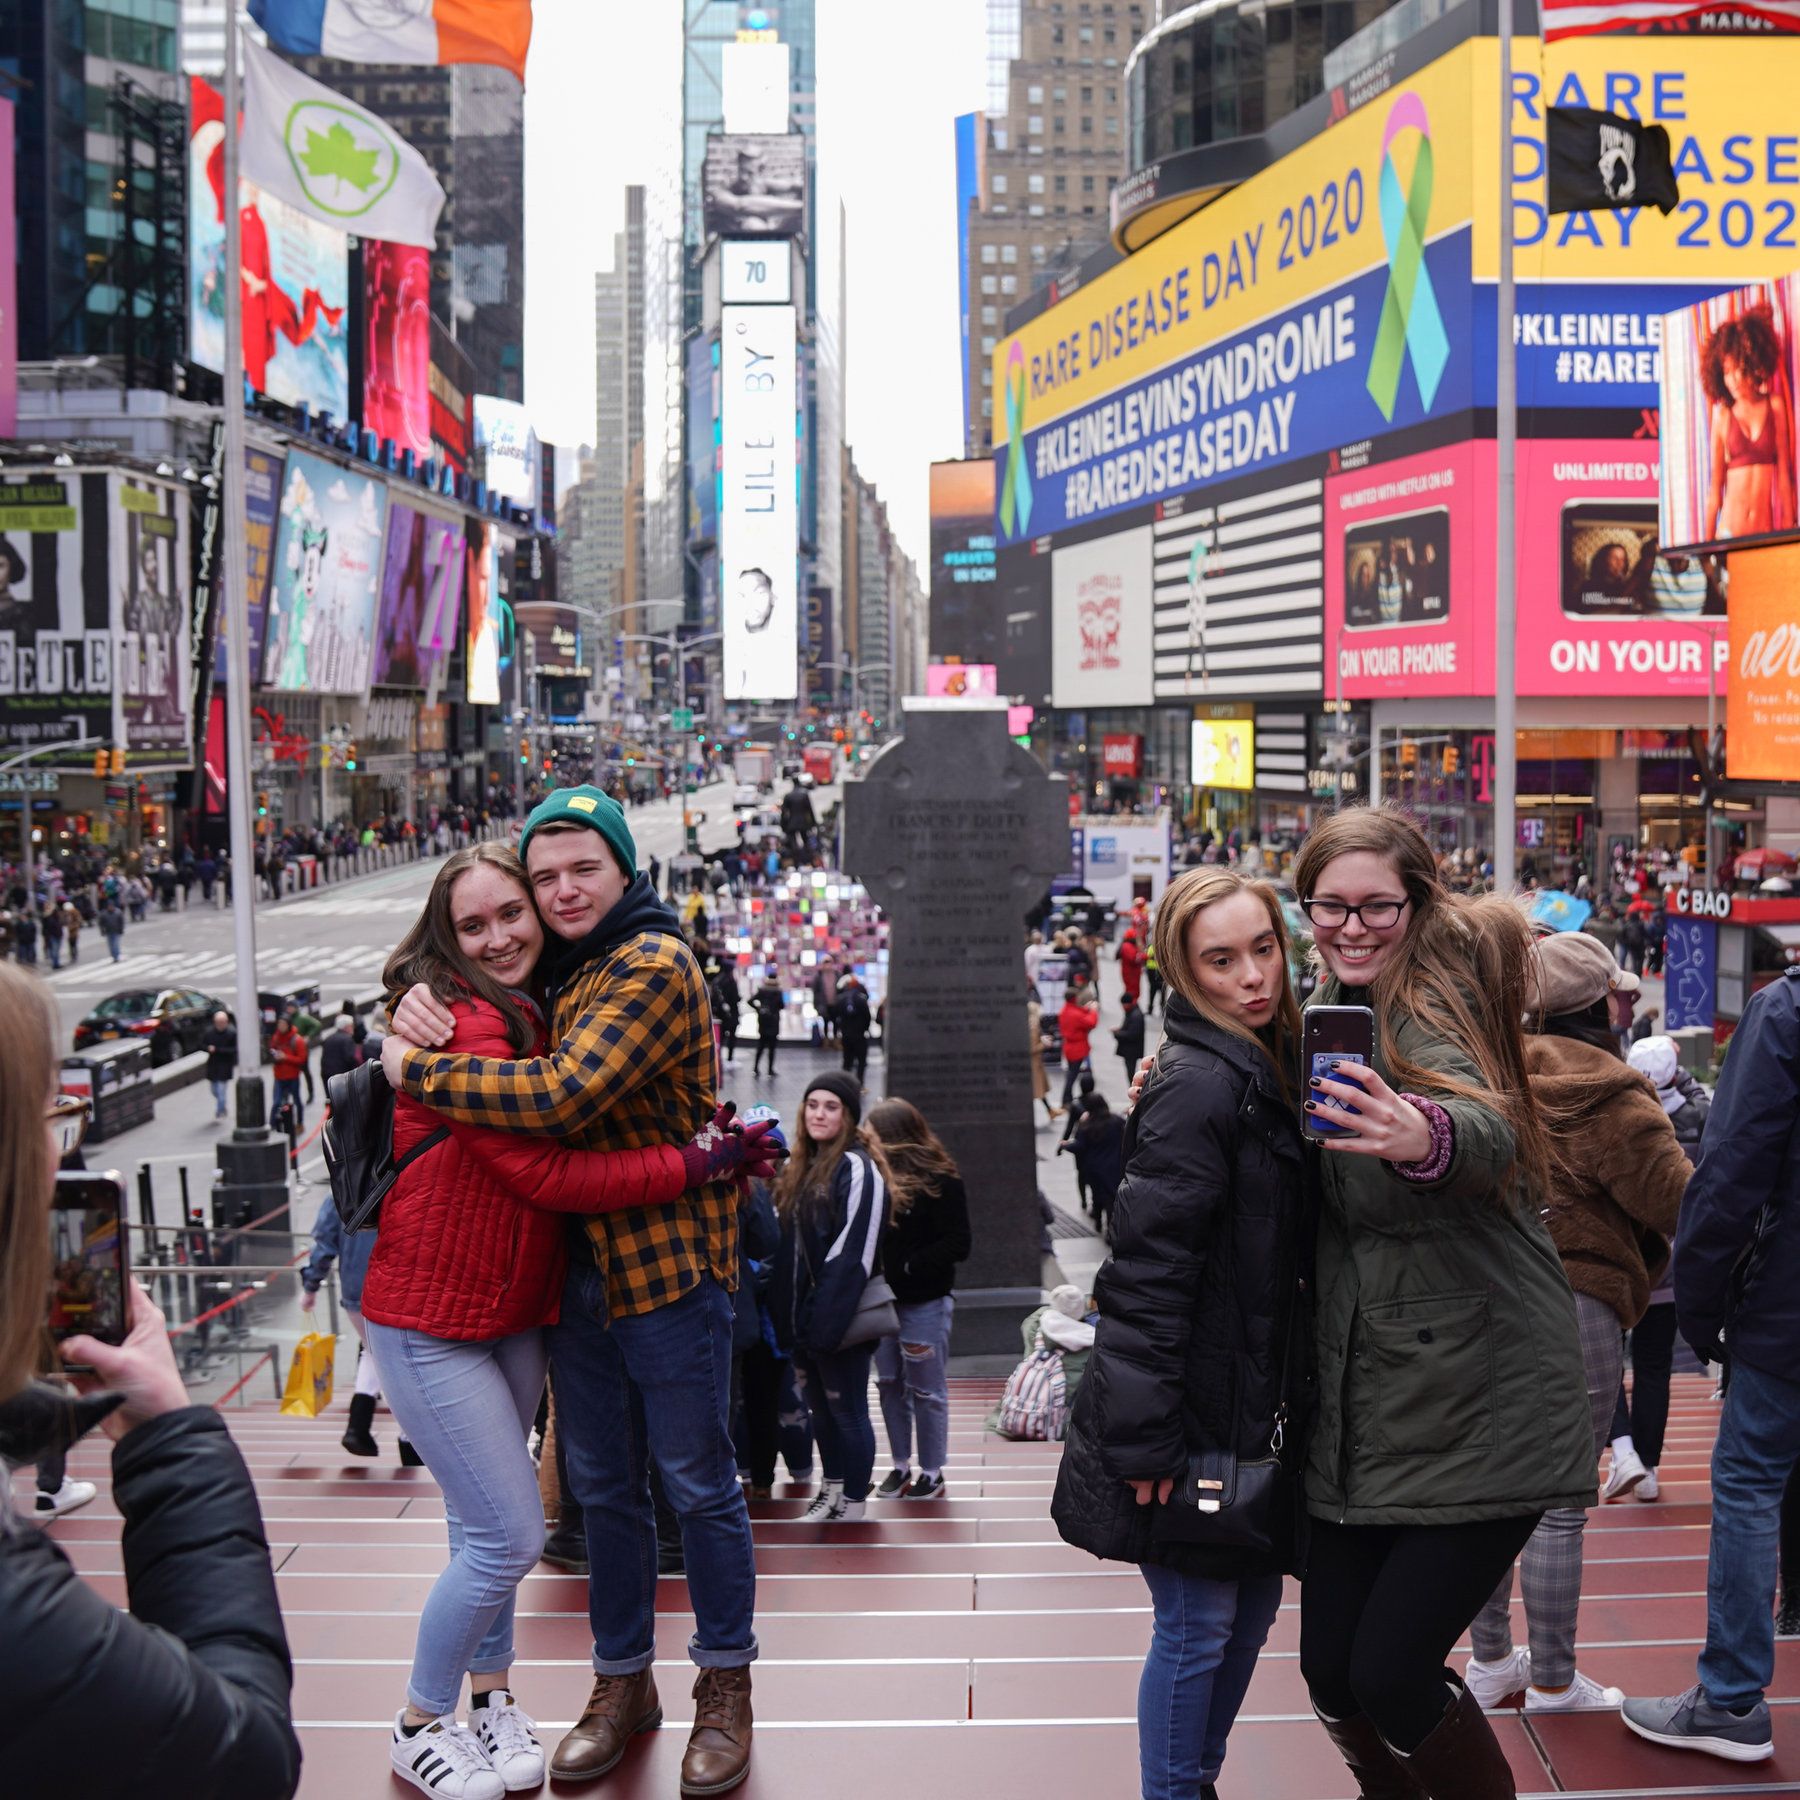 Crowds of tourists posing in NYC despite the coronavirus pandemic.